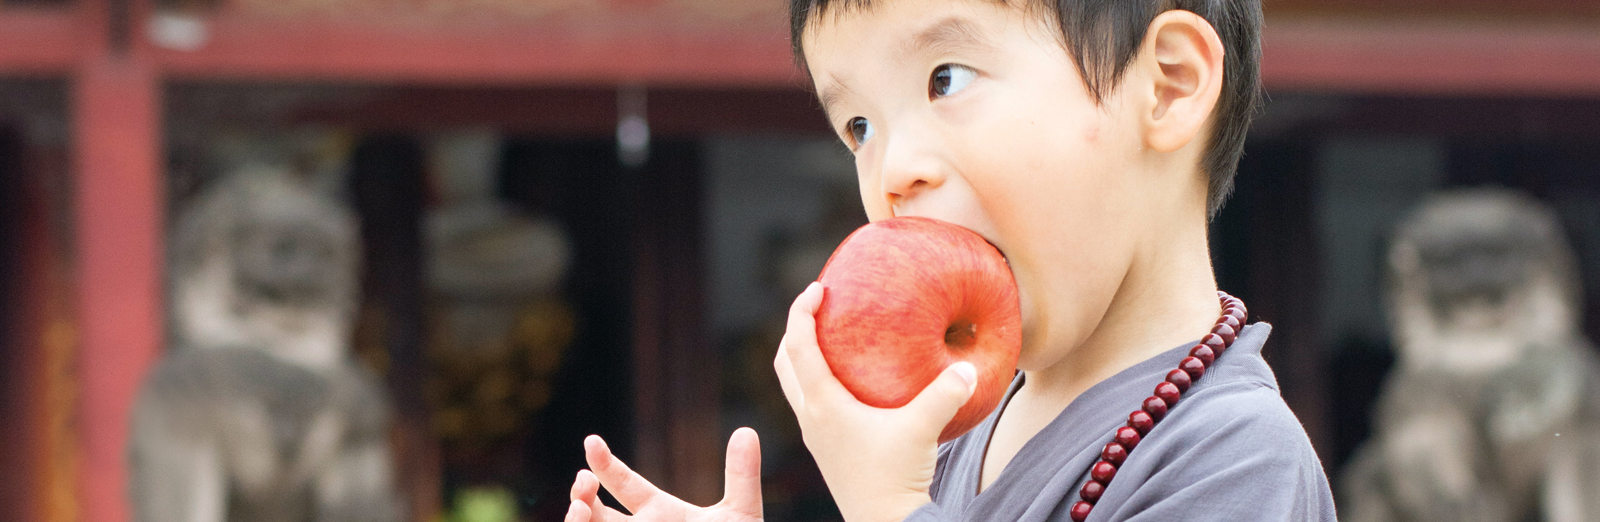 boy-eating-apple-1600x522.jpg